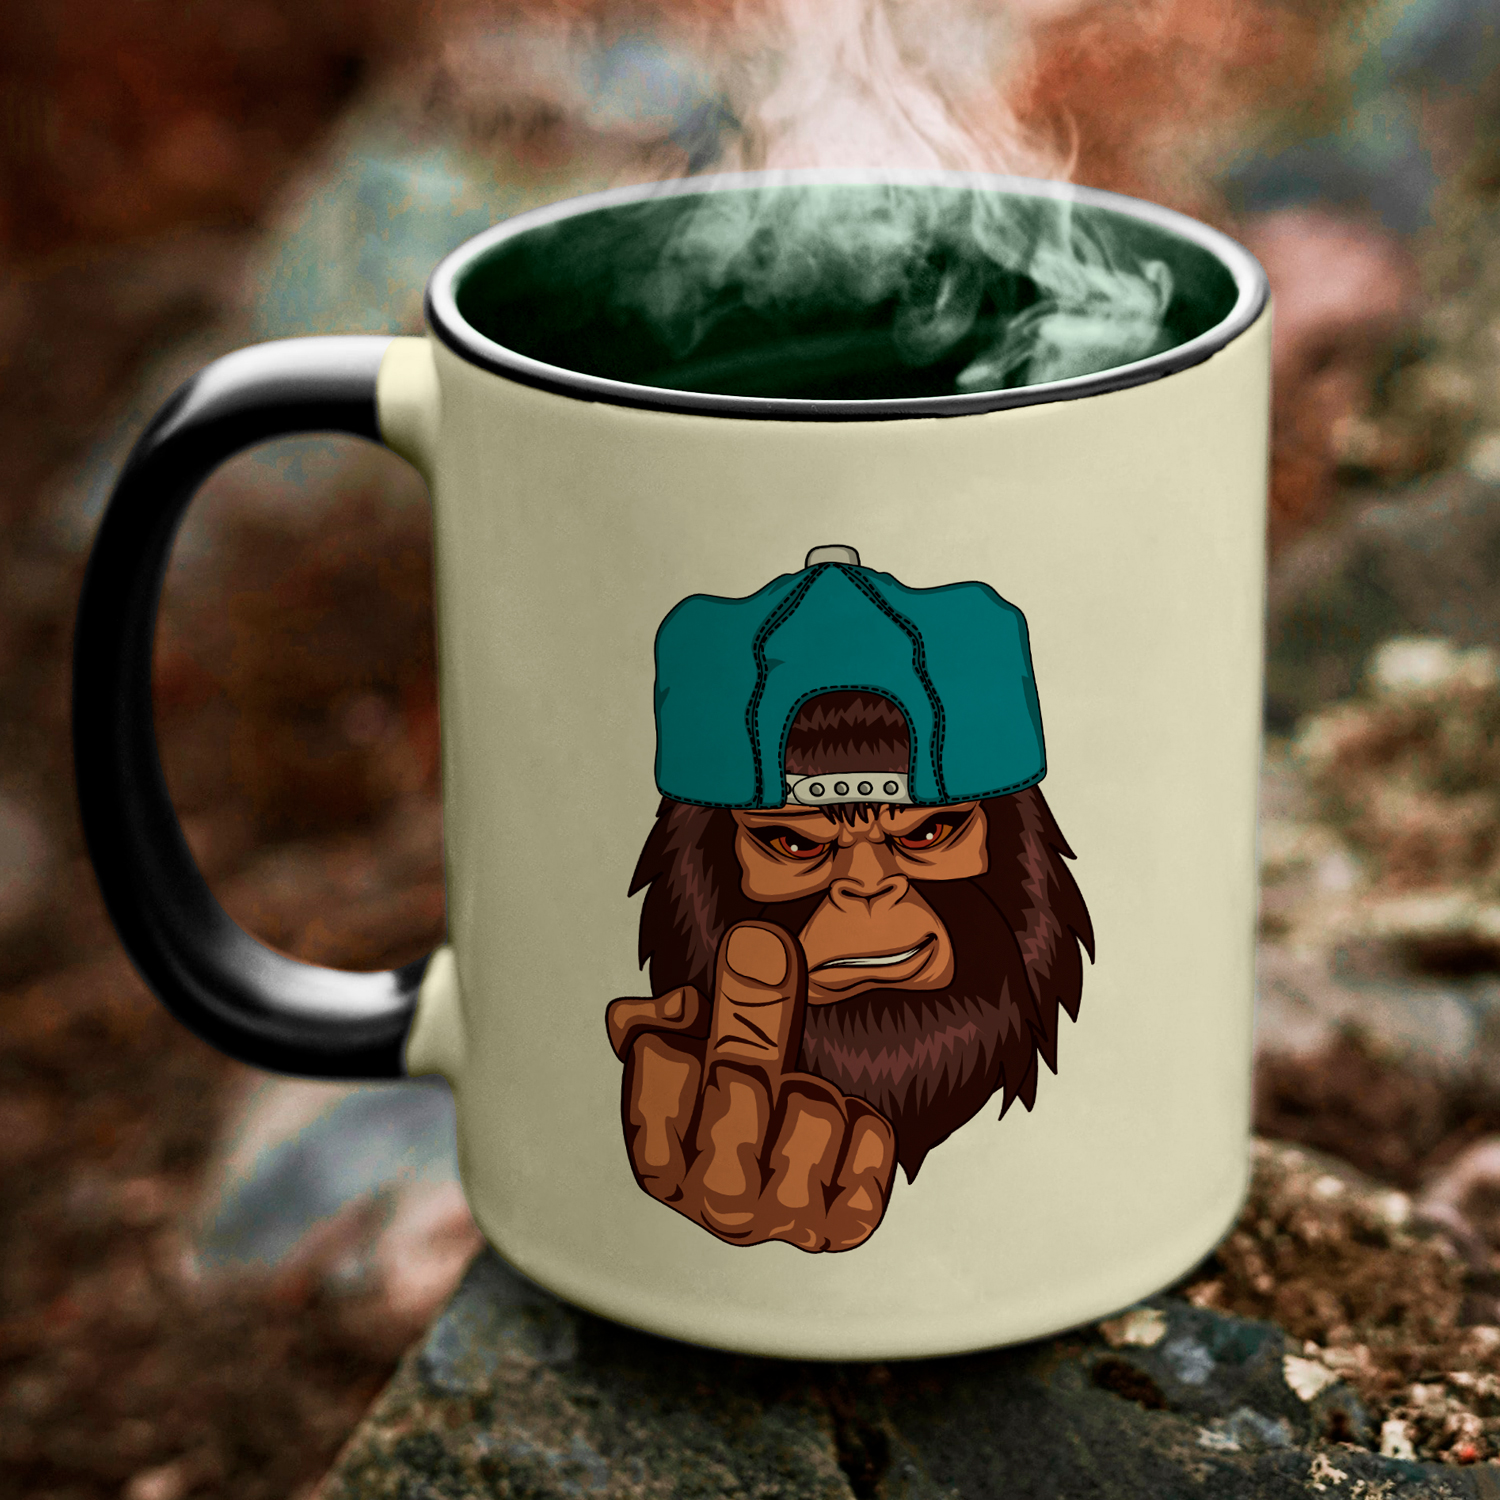 Coffee mug with a monkey wearing a hat on it.